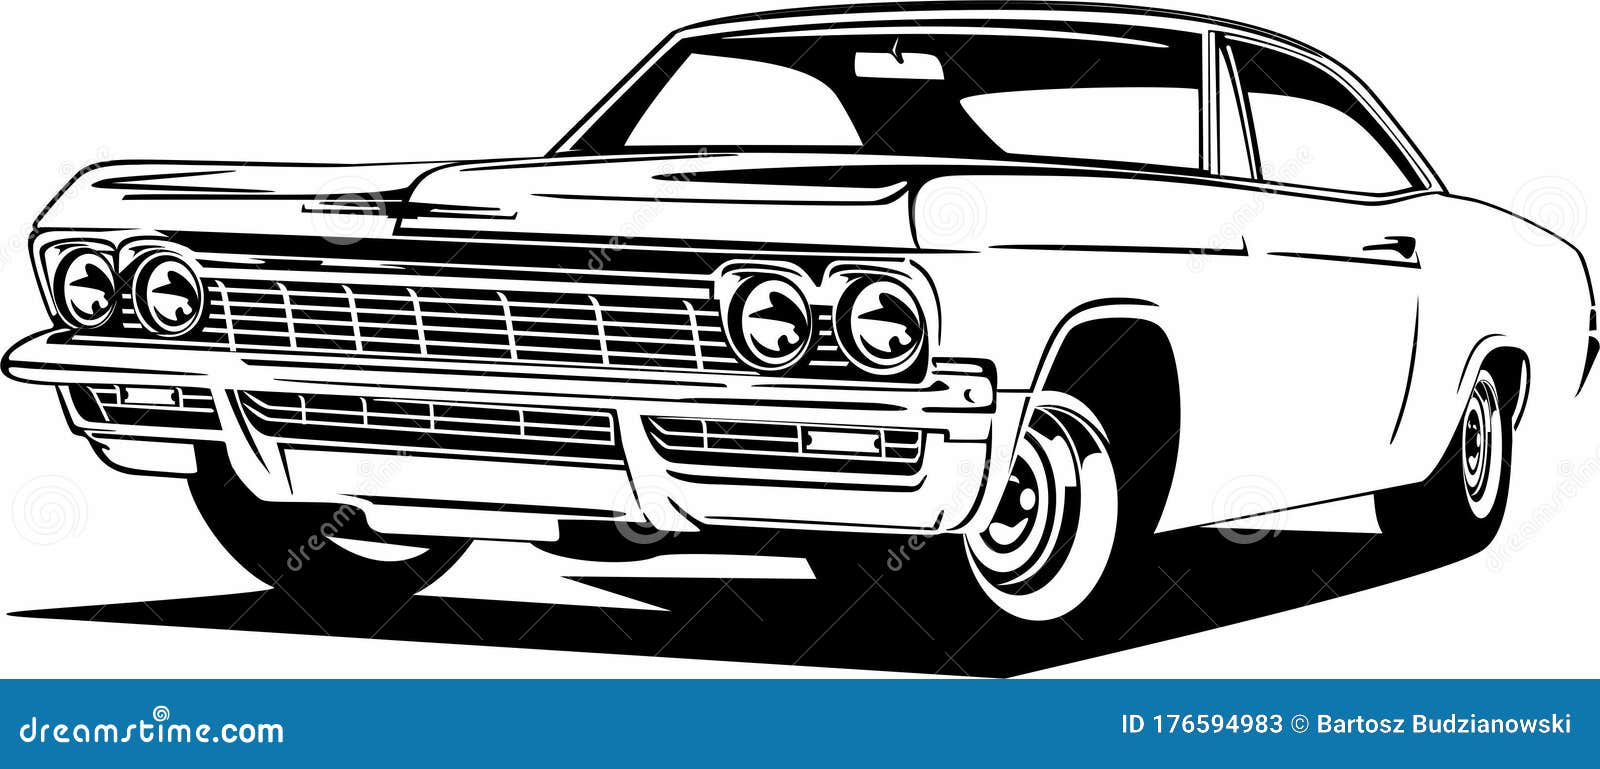 classic vintage retro american legendary car chevrolet impala